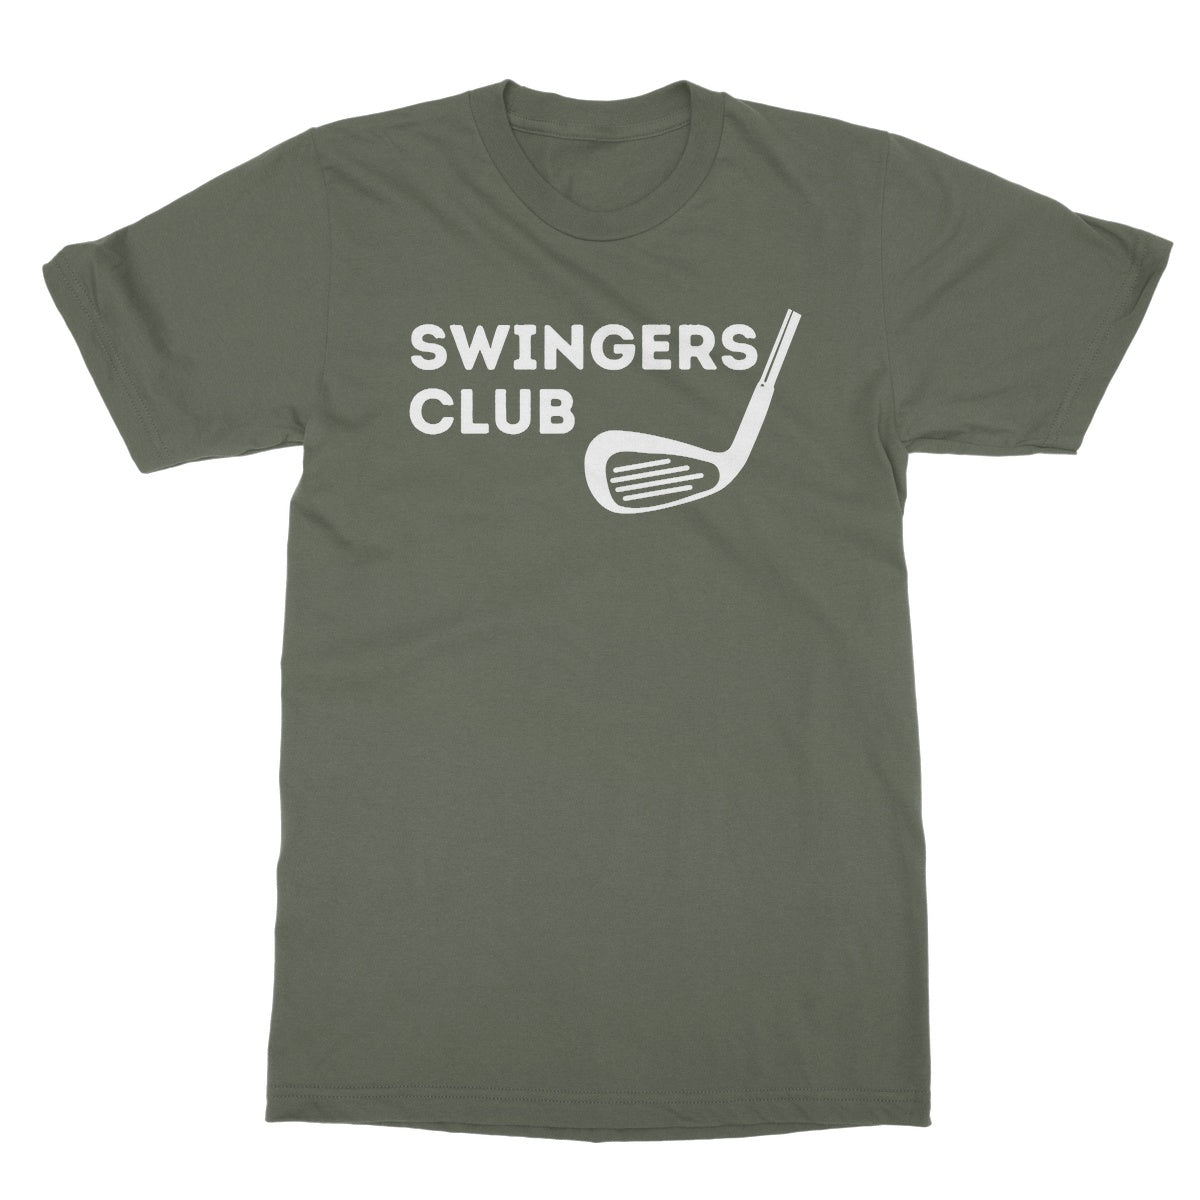 swingers club t shirt green